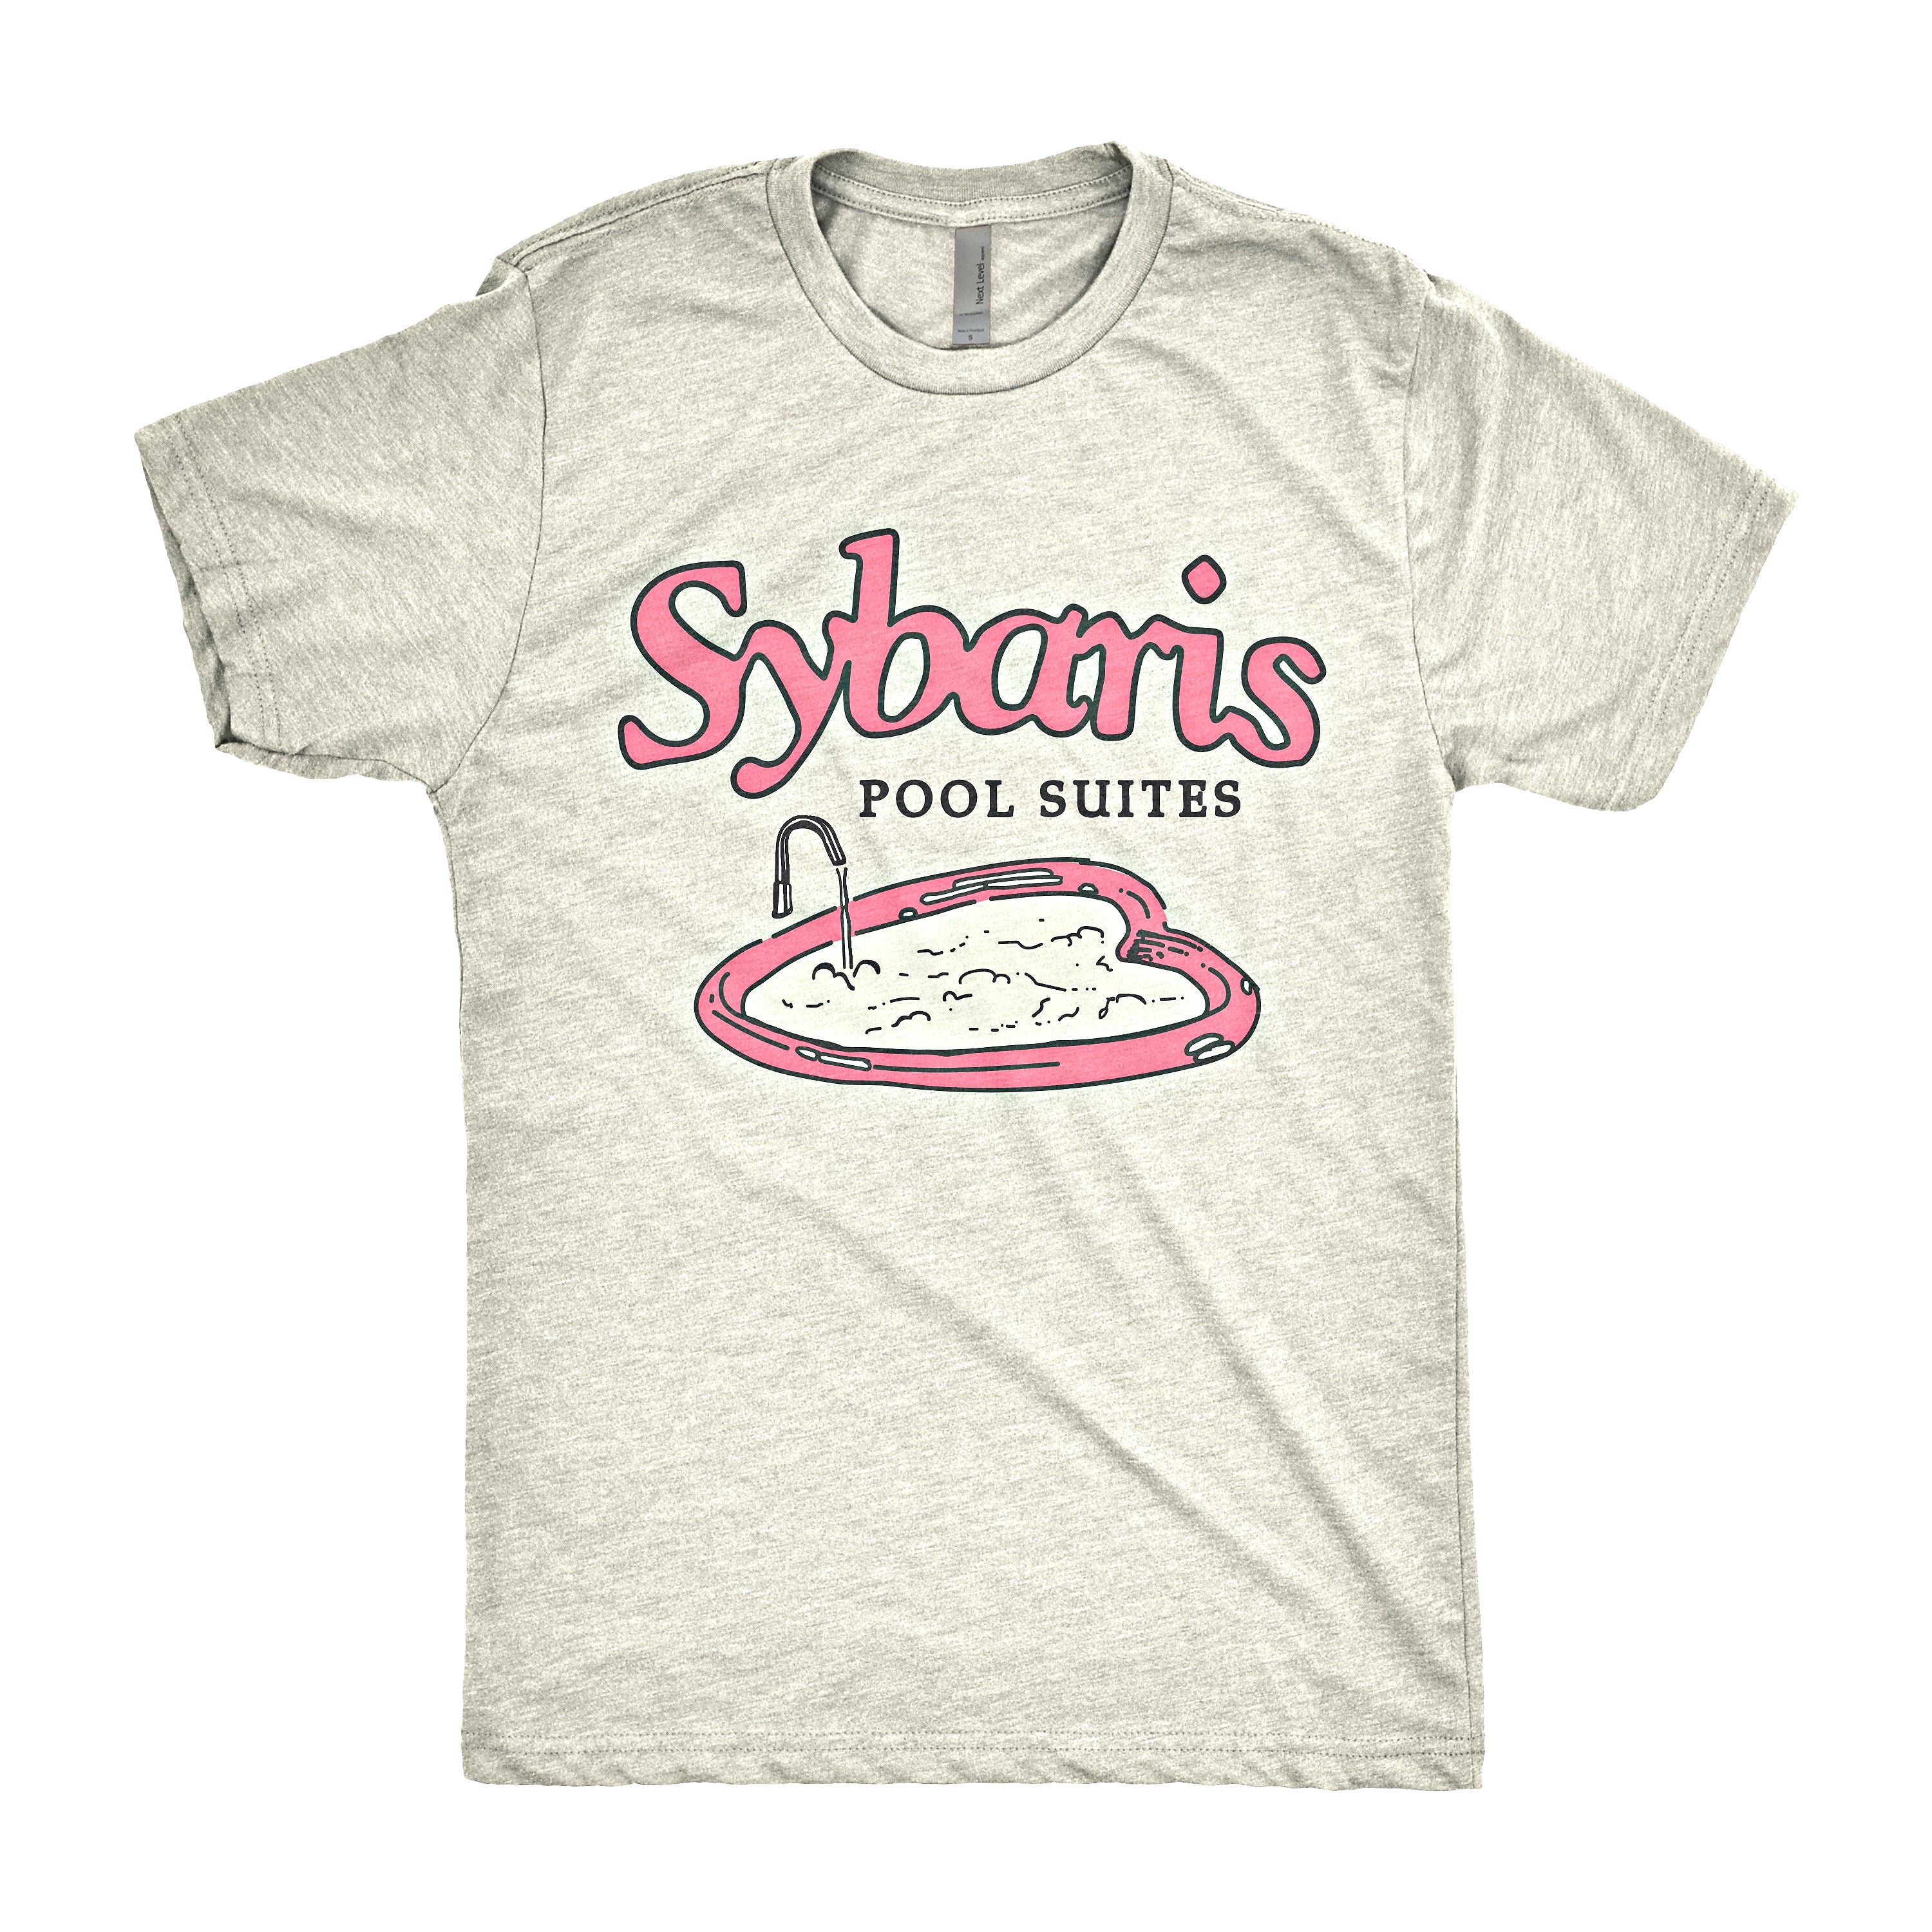 Sybaris Pool Suites T-Shirt